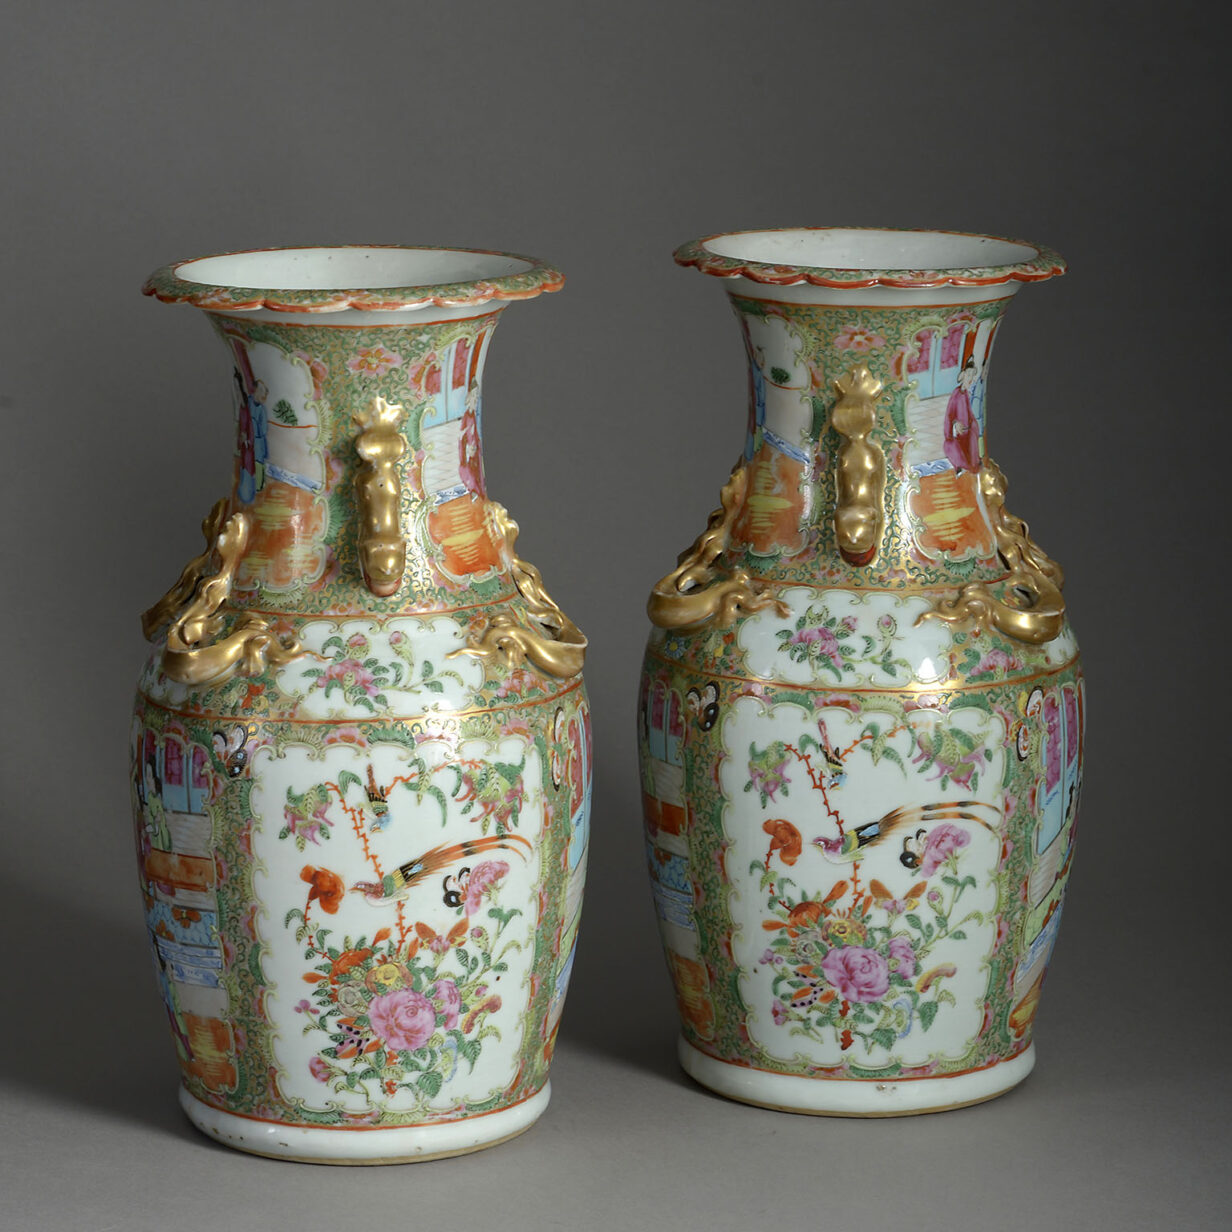 Pair of Canton Porcelain Vases